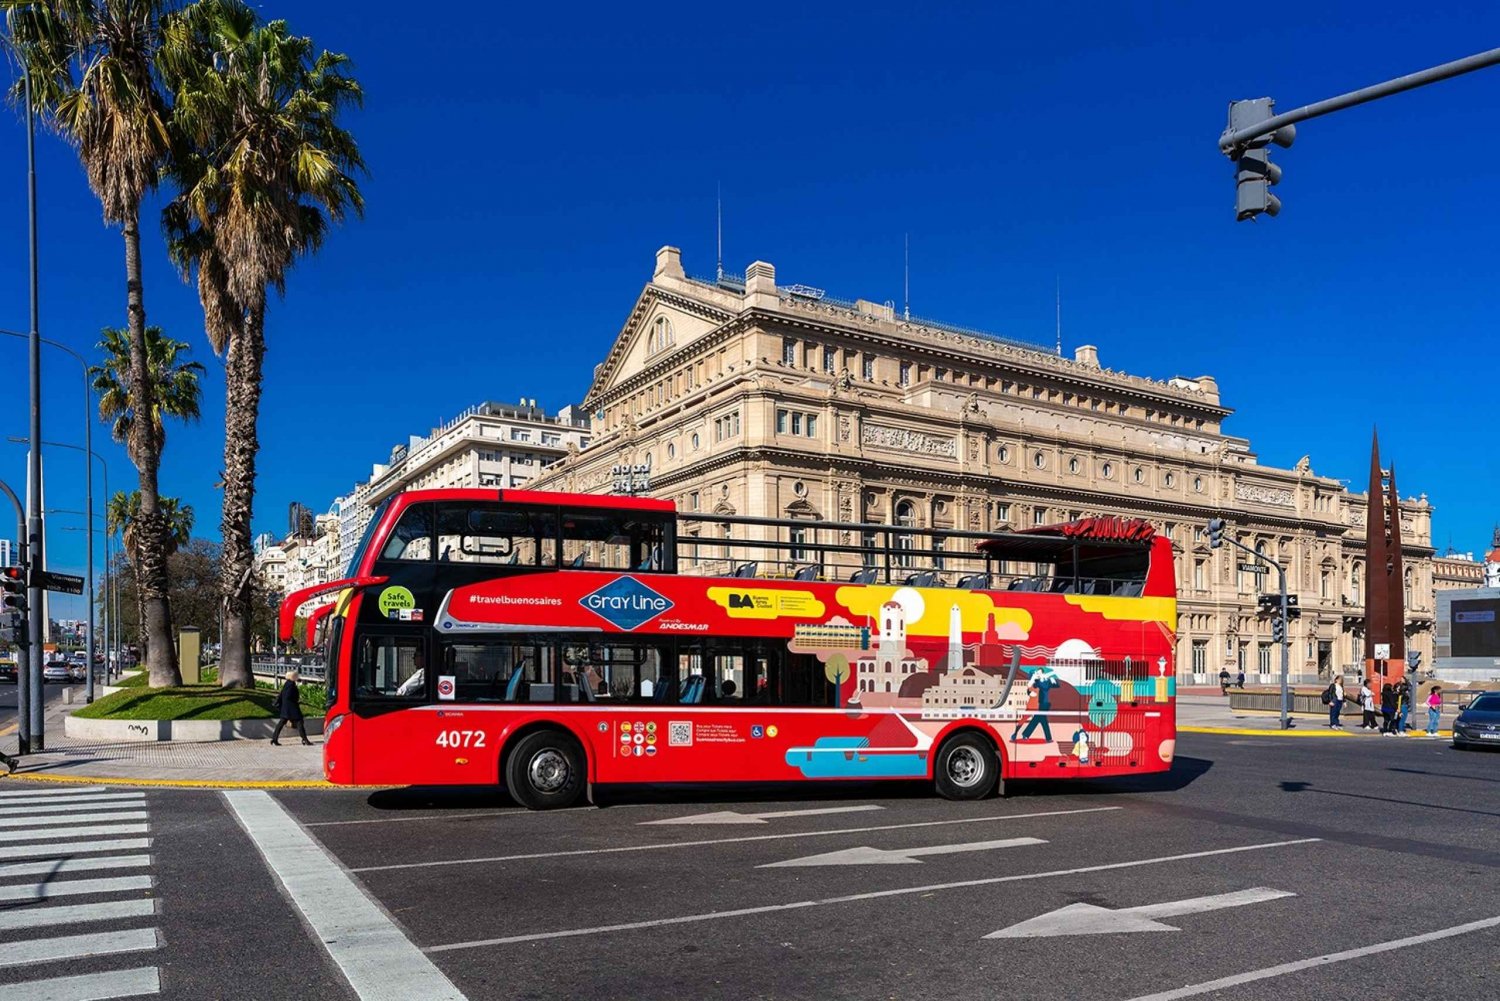 Buenos Aires: Tour en autobús turístico con paradas libres